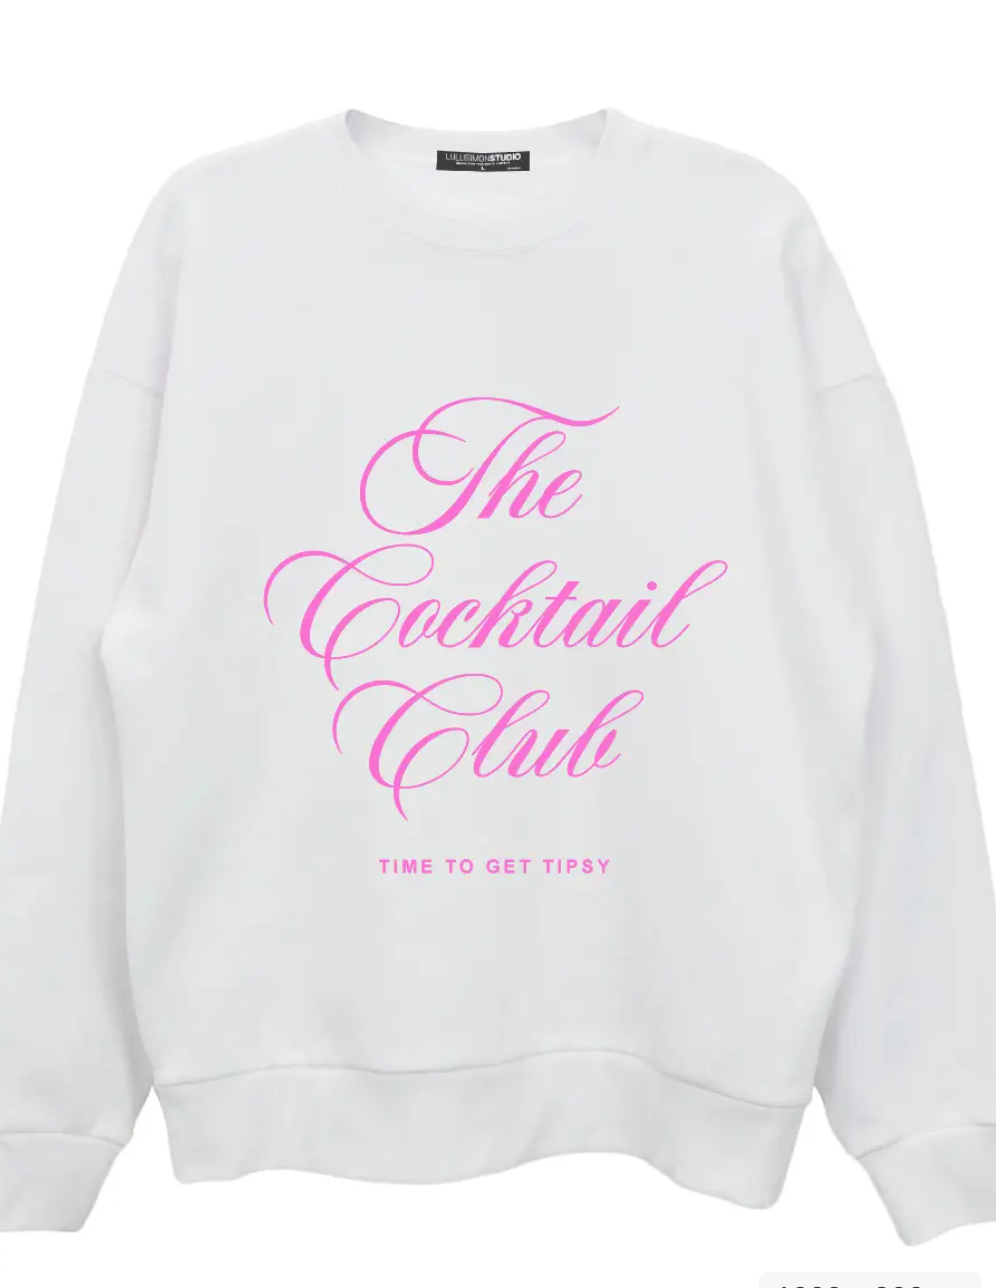 The Cocktail Club Sweatshirt